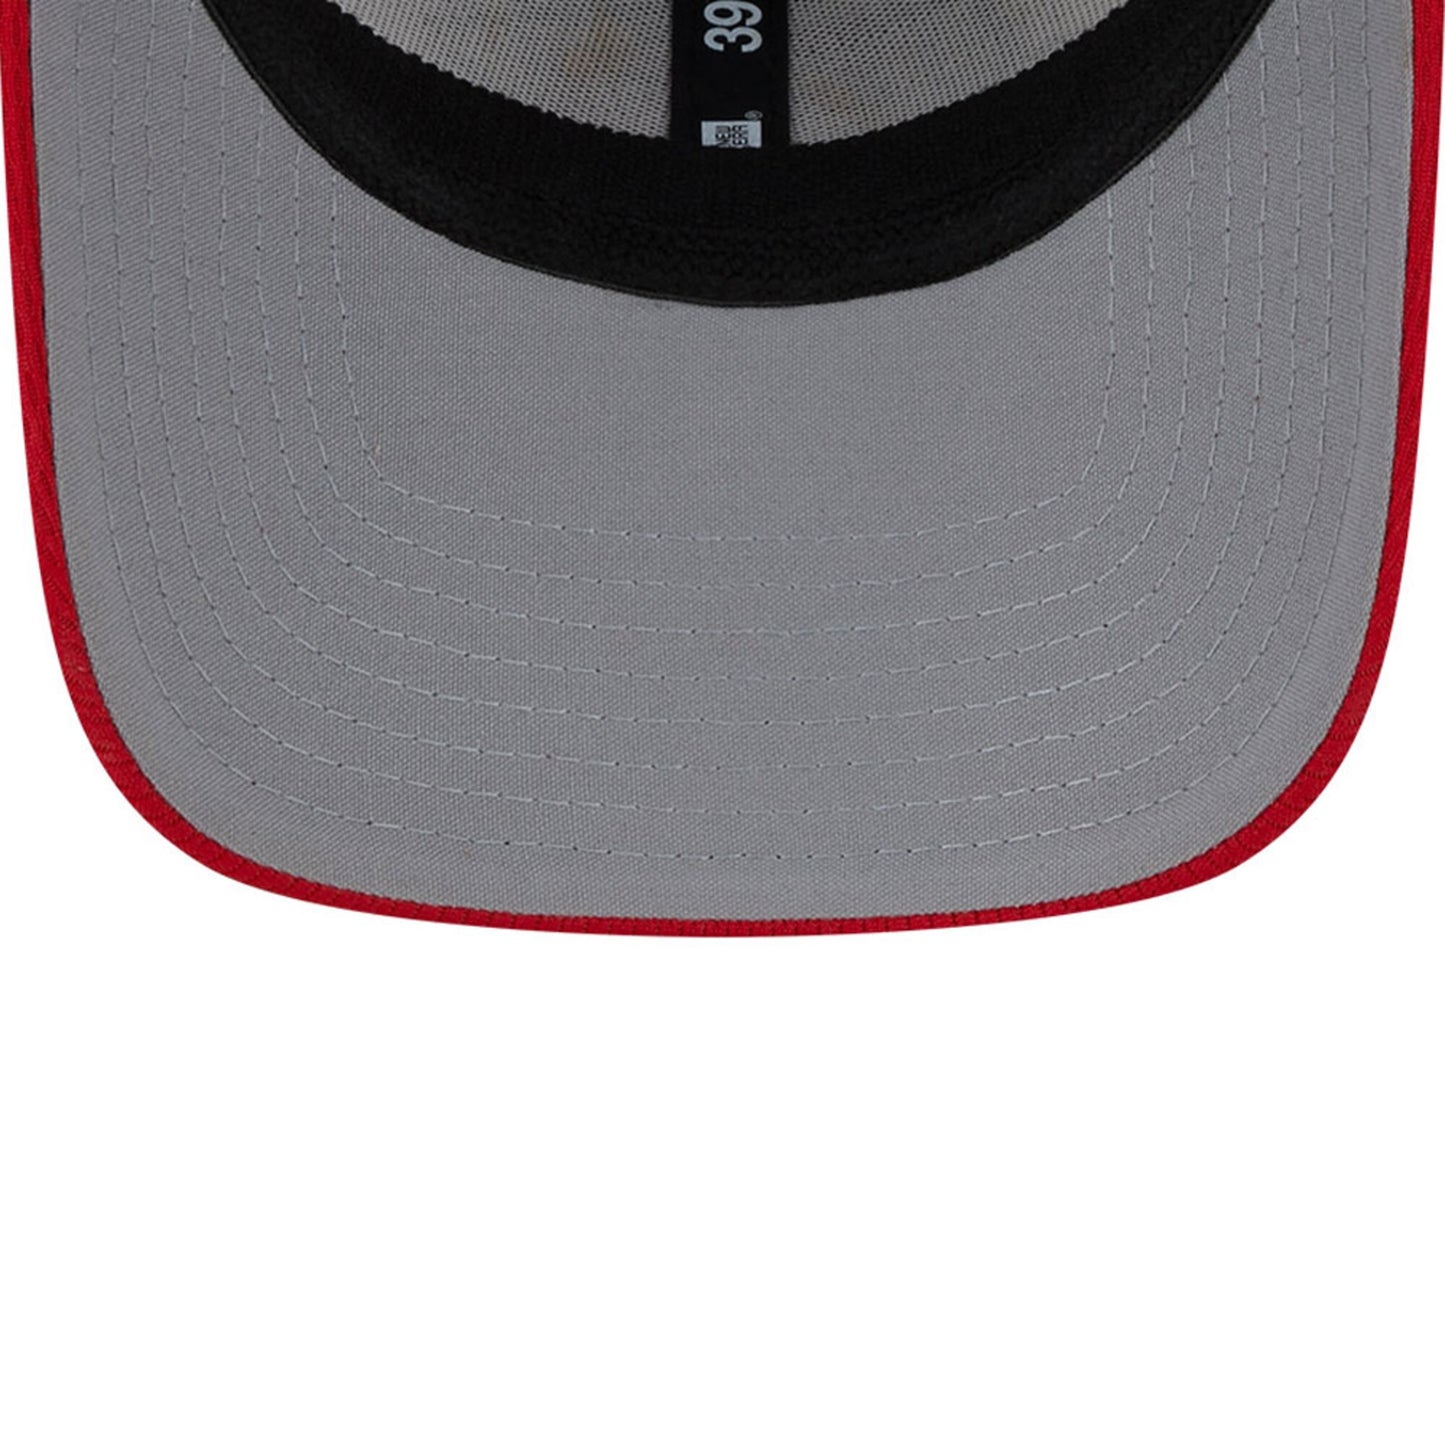 Men's Kansas City Chiefs Primary Logo New Era White/Red 2023 Sideline 39THIRTY Flex Hat